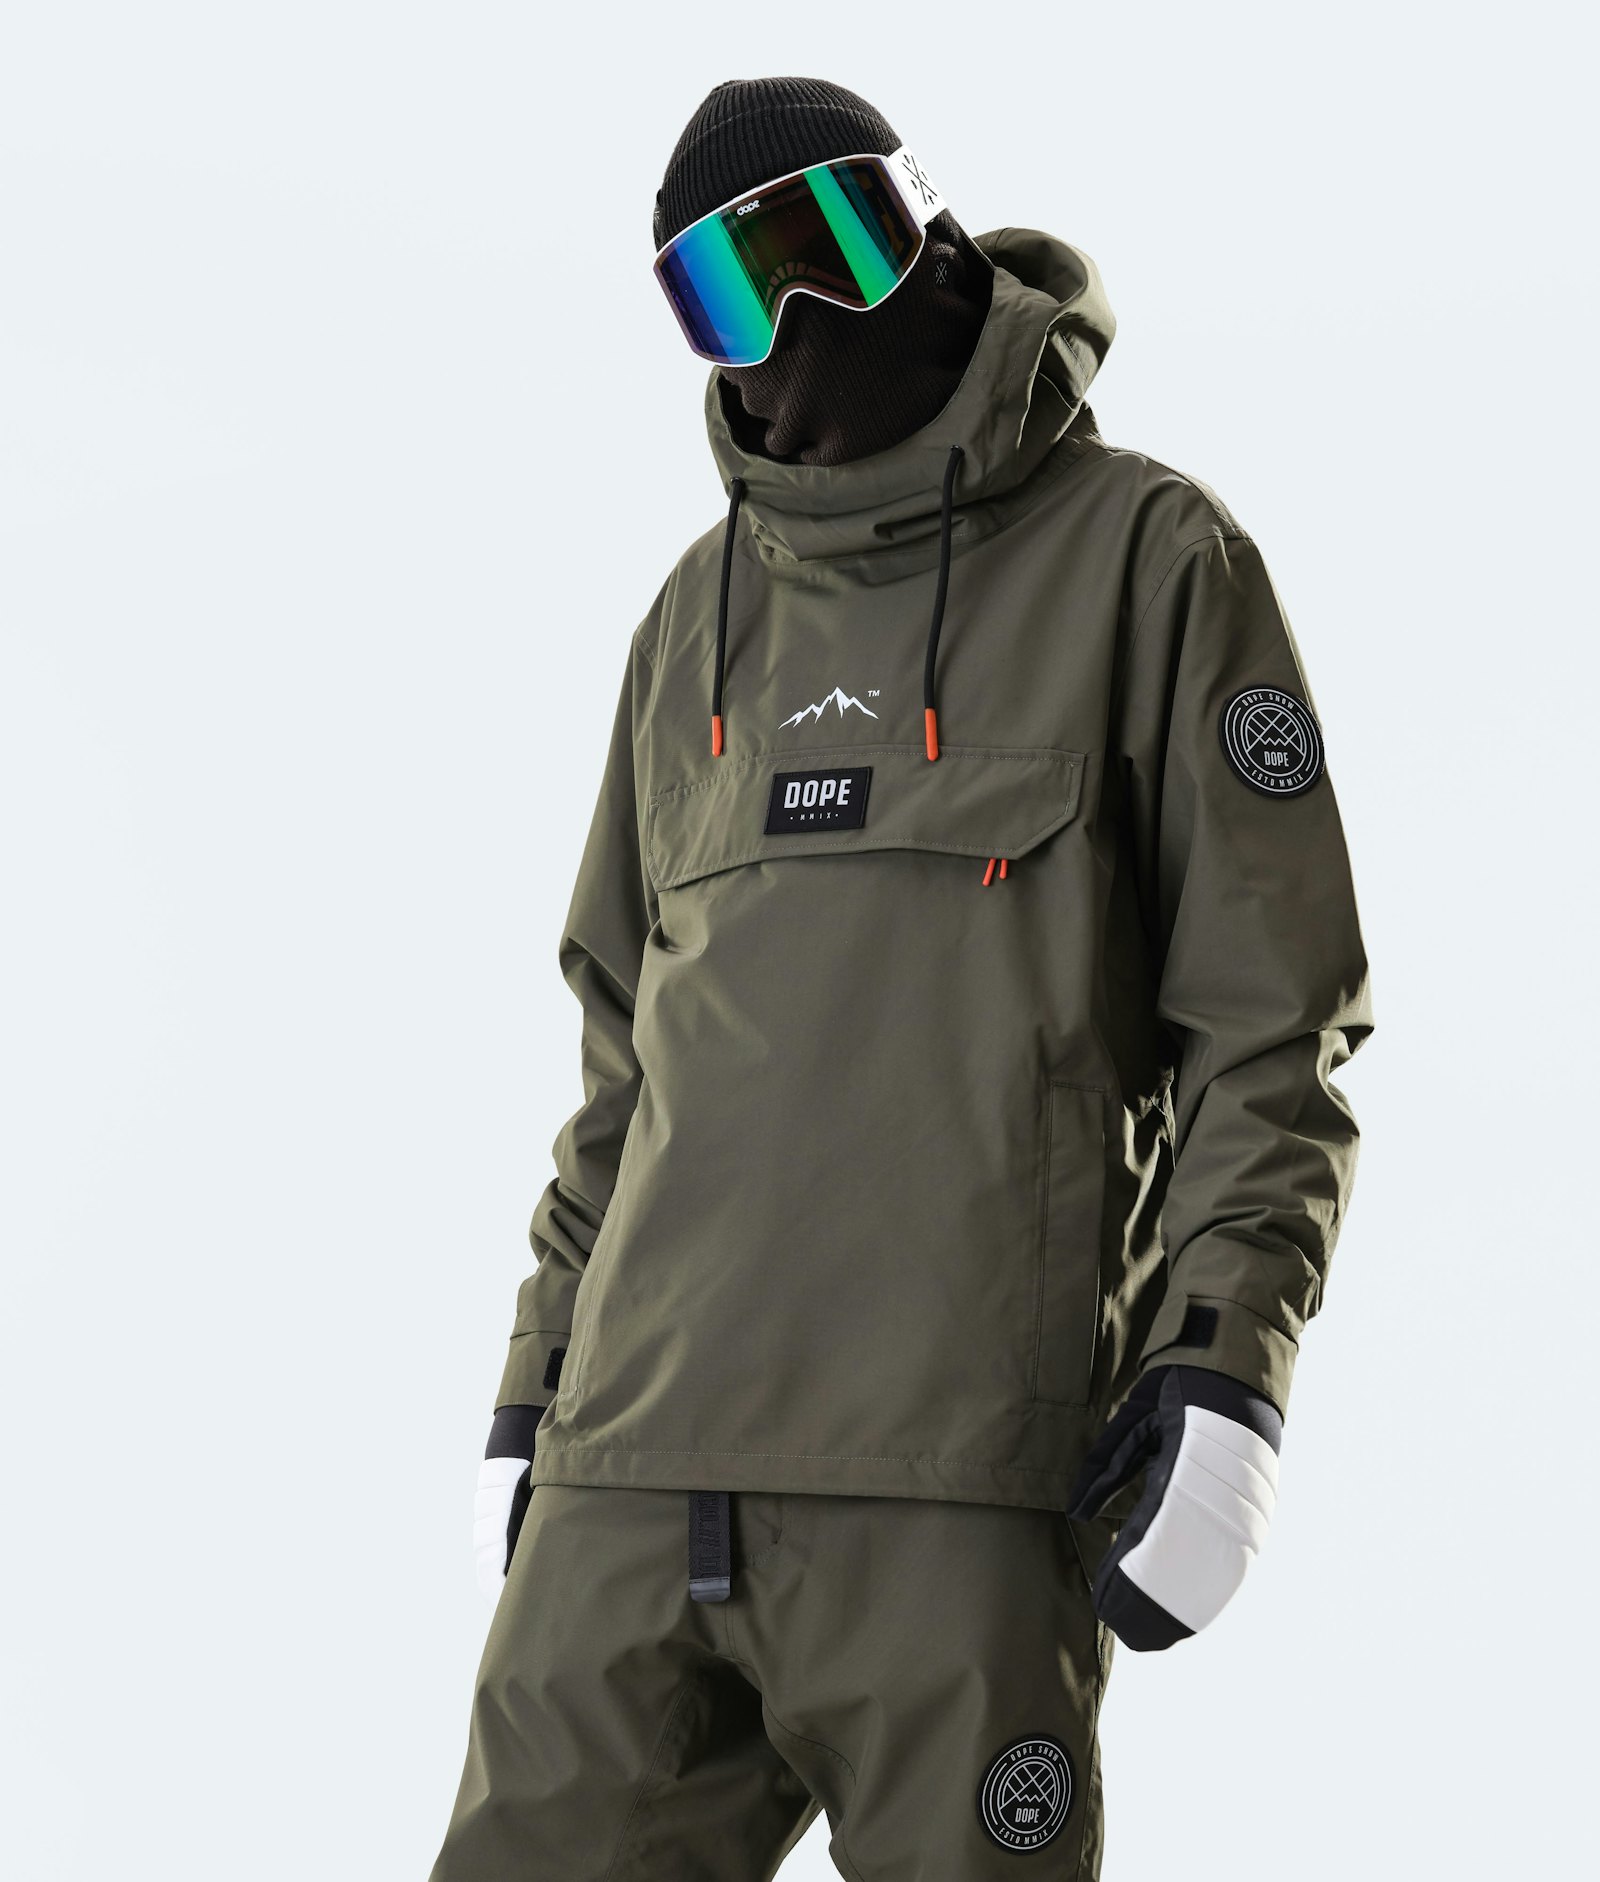 Blizzard 2020 Snowboard Jacket Men Olive Green